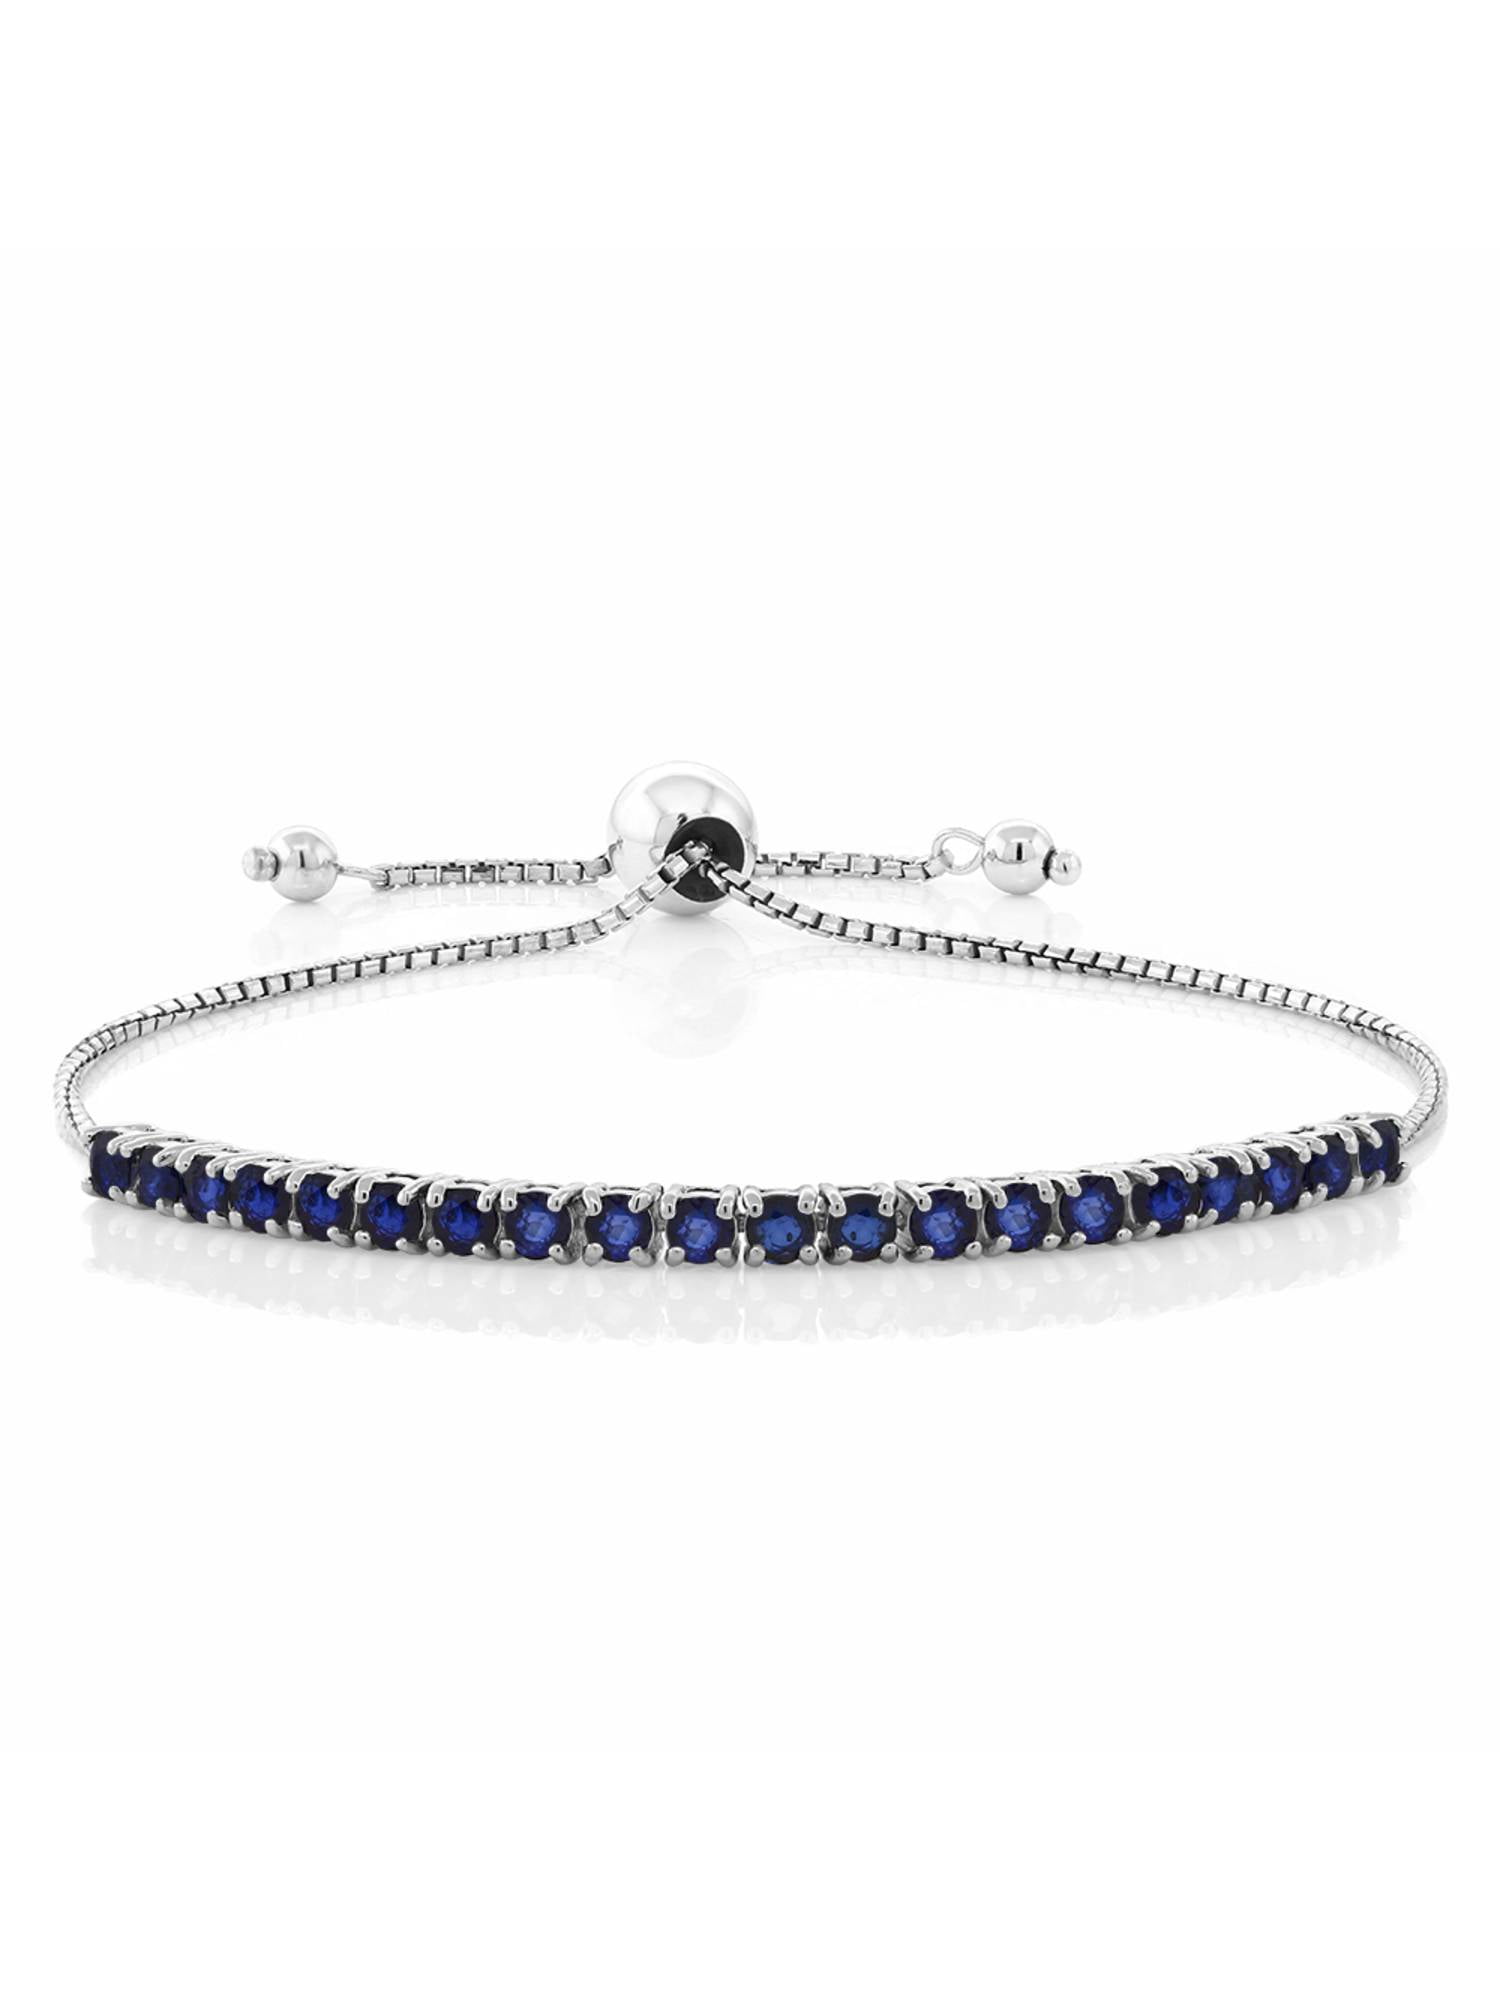 BRA-36 925 GENUINE Sterling Silver and Mystic Blue Sapphire Gemstone Bracelet 